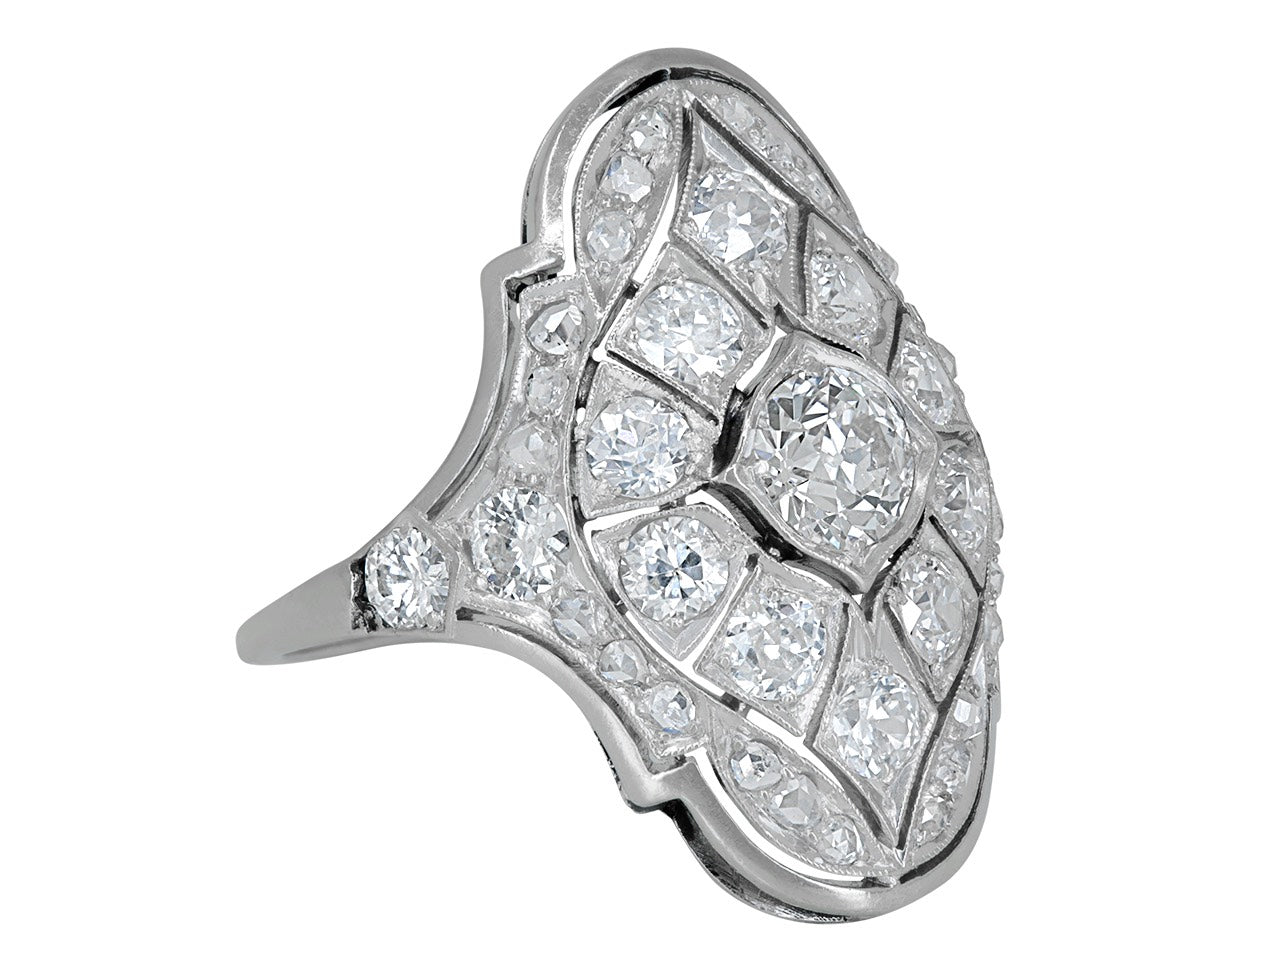 Antique Edwardian Elongated Diamond Ring in Platinum